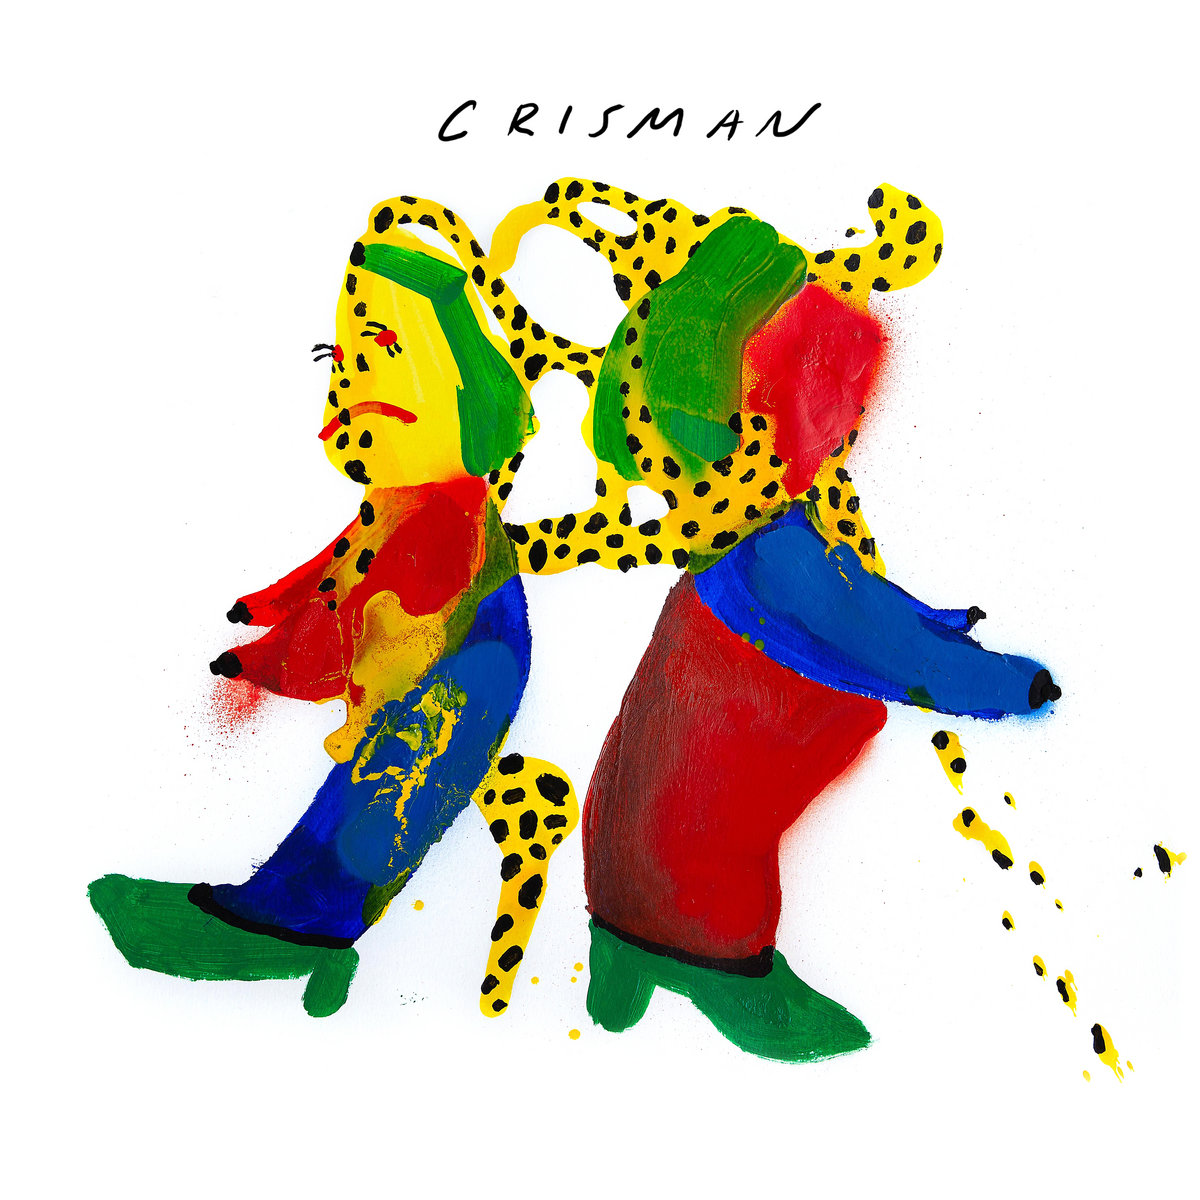 crisman album art abstract figures in primary colours